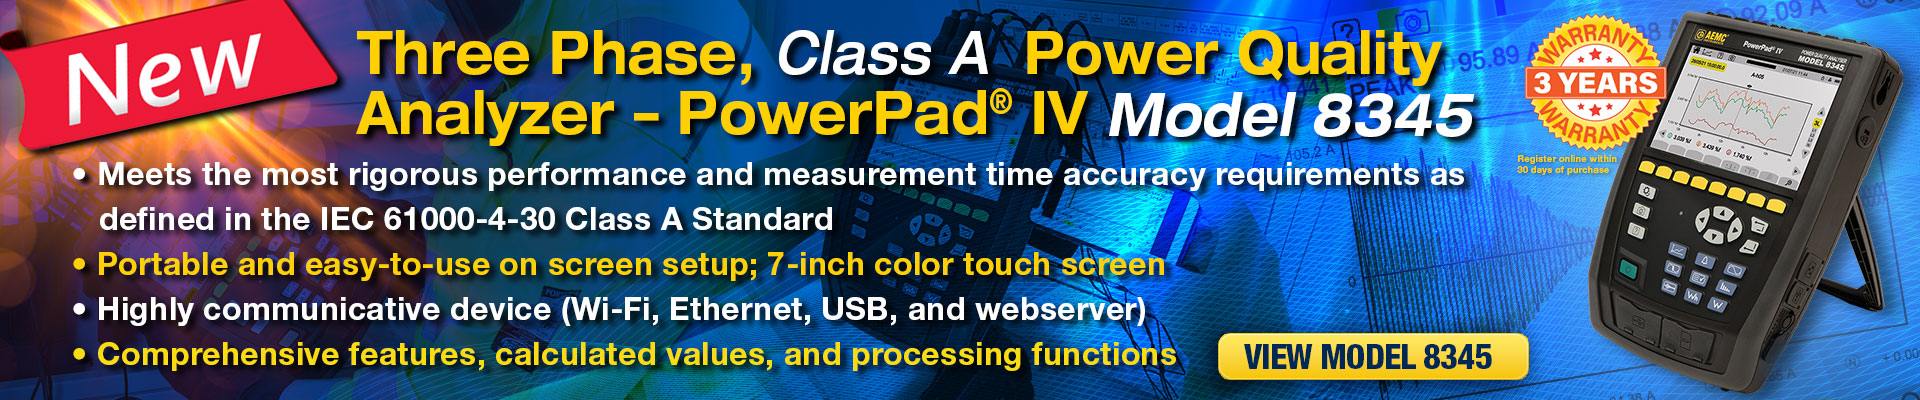 Introducing the NEW Class A Power Quality Analyzer PowerPad IV Model 8345.